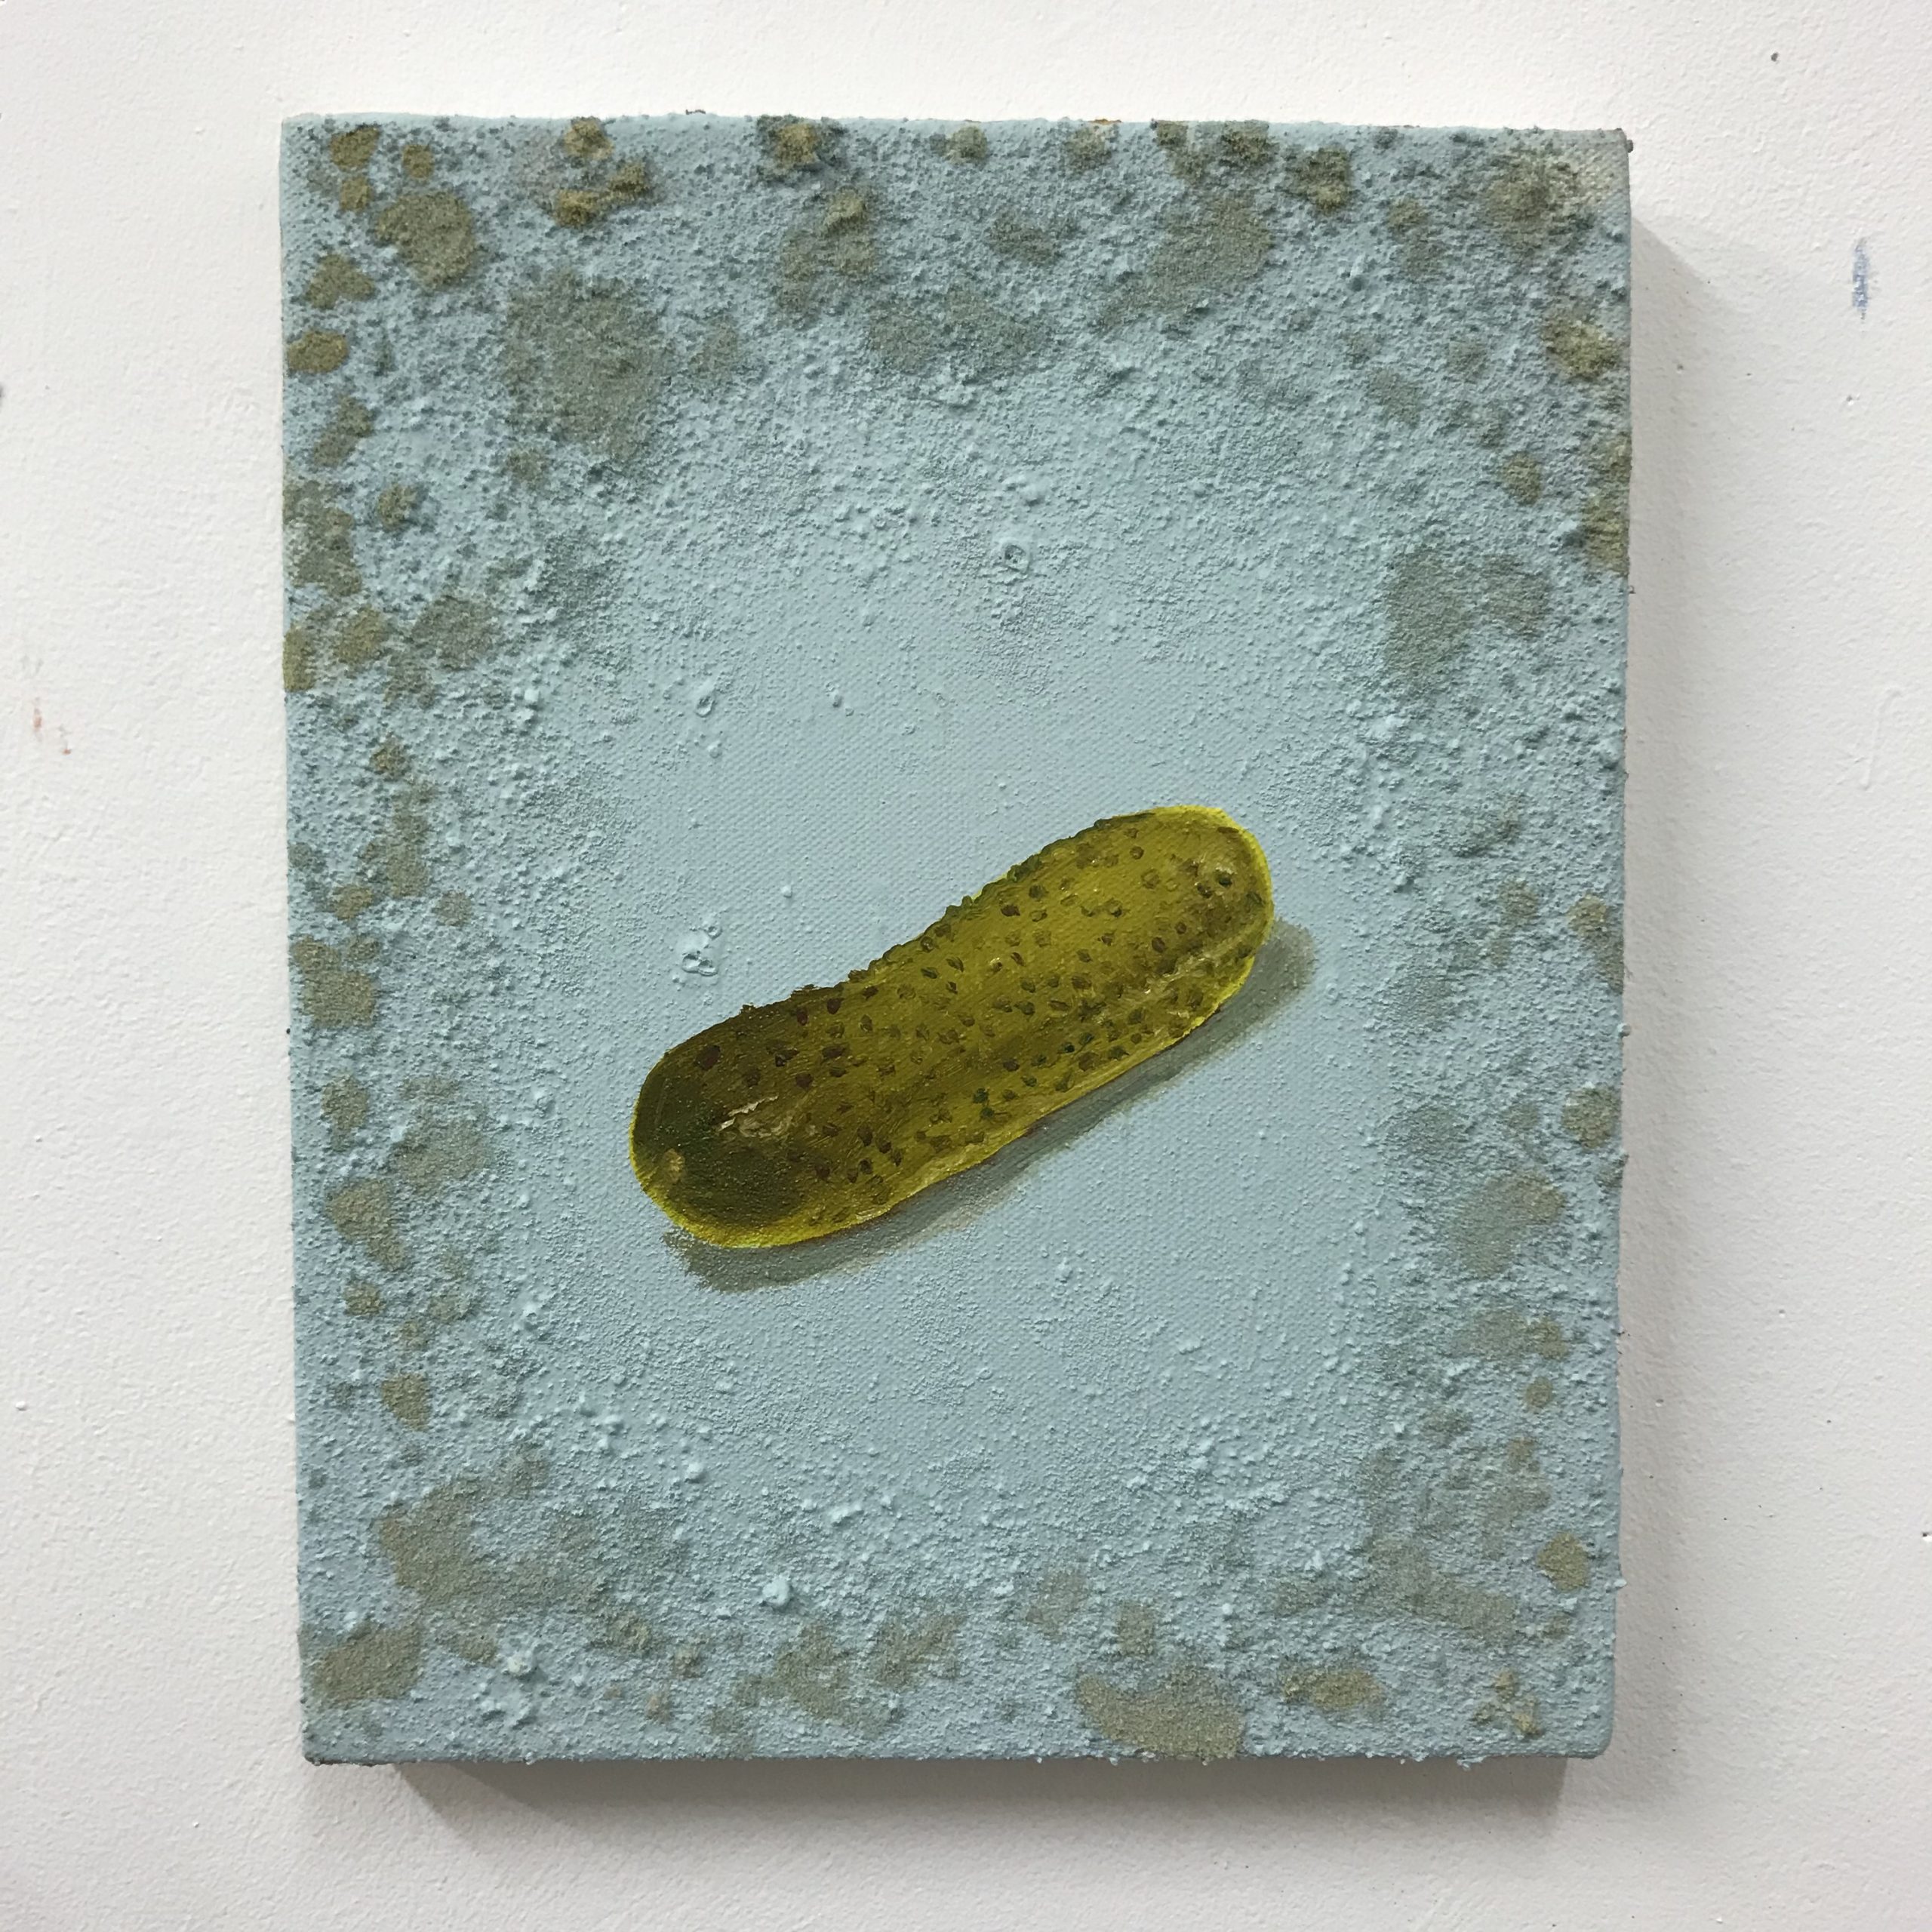 Allison Katz, In a pickle, 2019